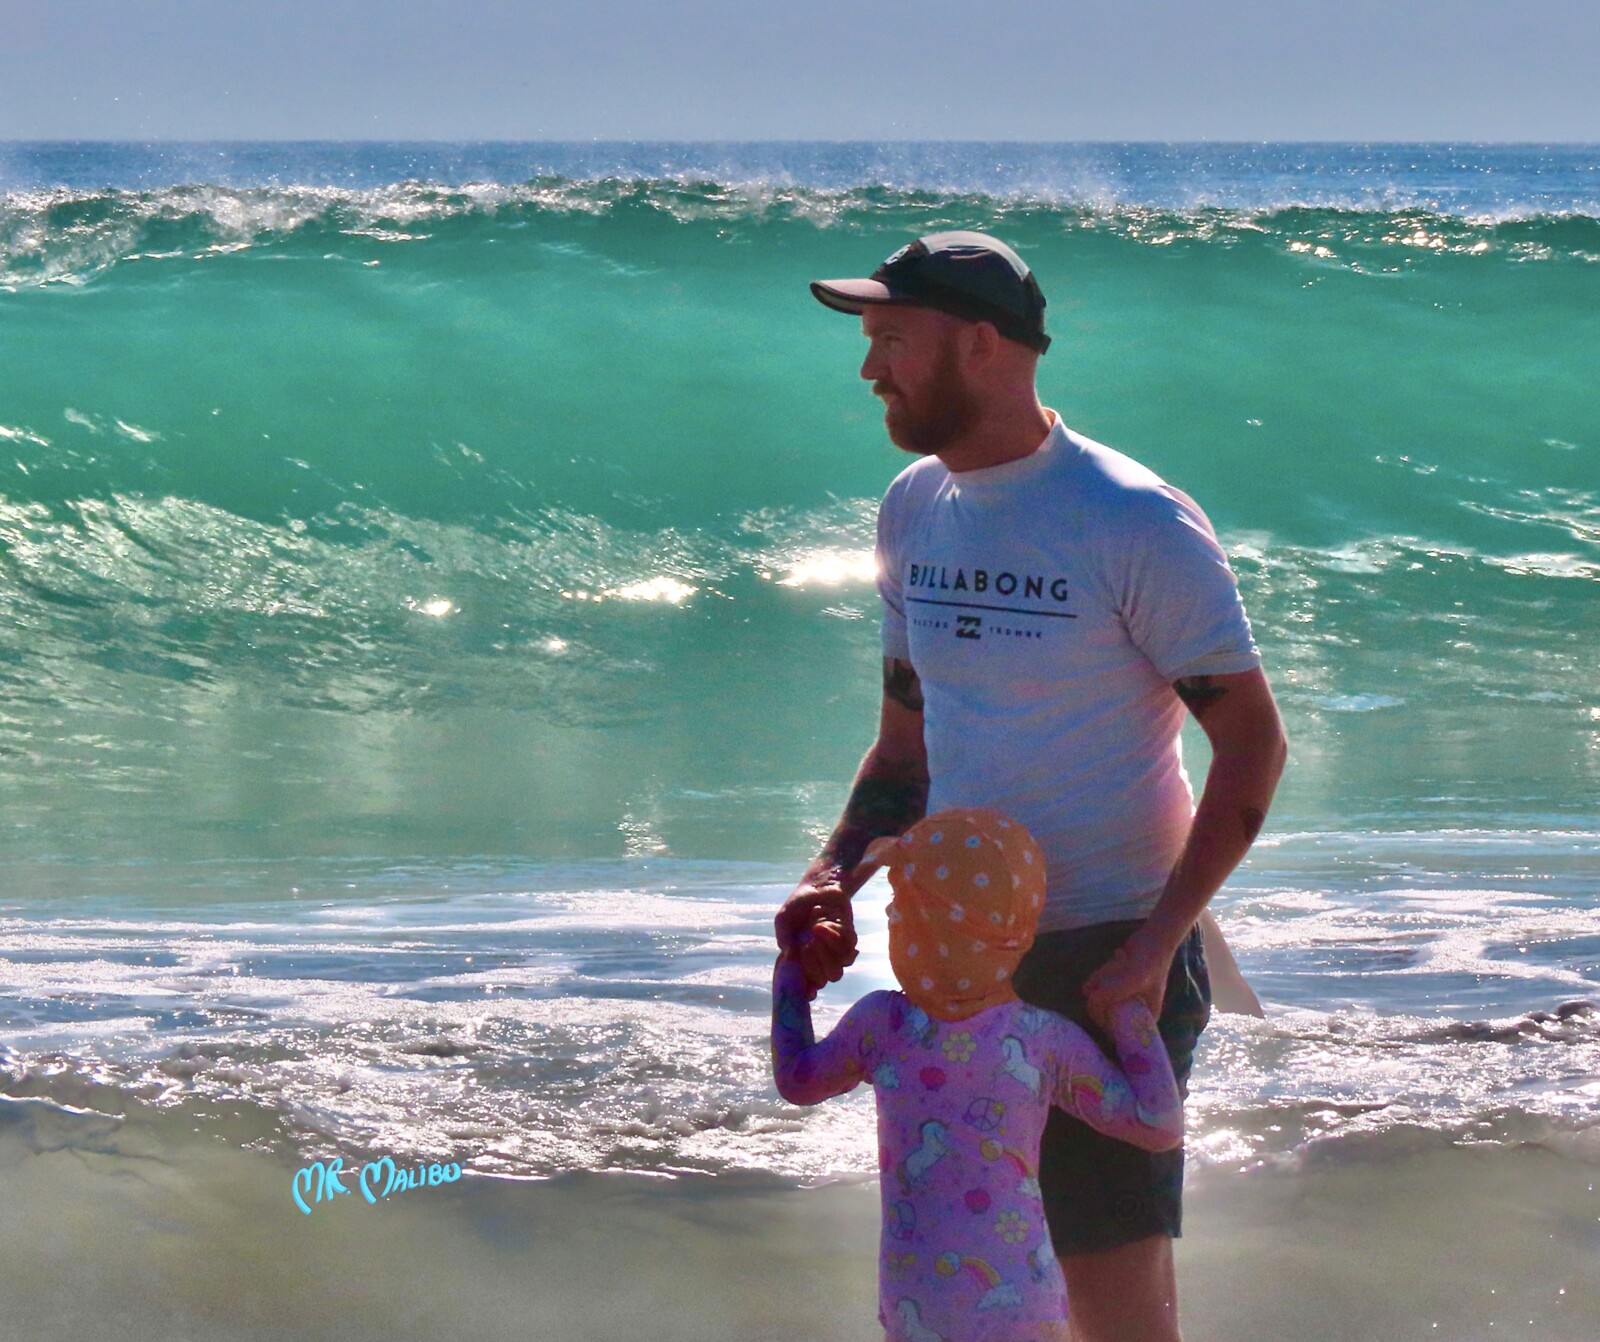 Daddy Diary] Exploring the Beauty of Zuma Beach in Malibu